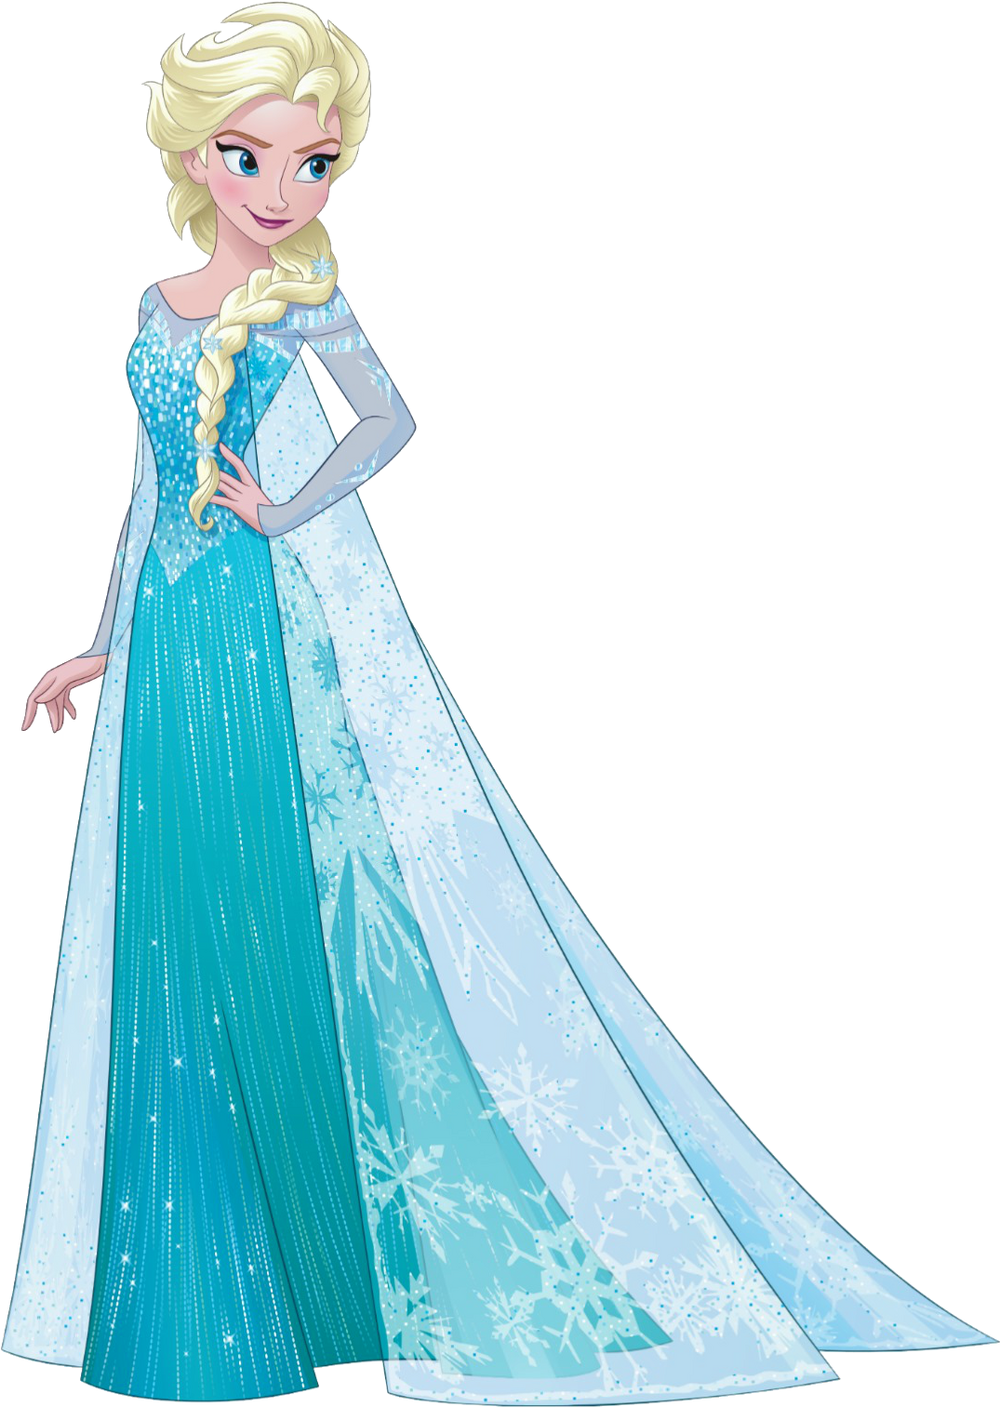 Elsa | Disney Princess Wiki | Fandom